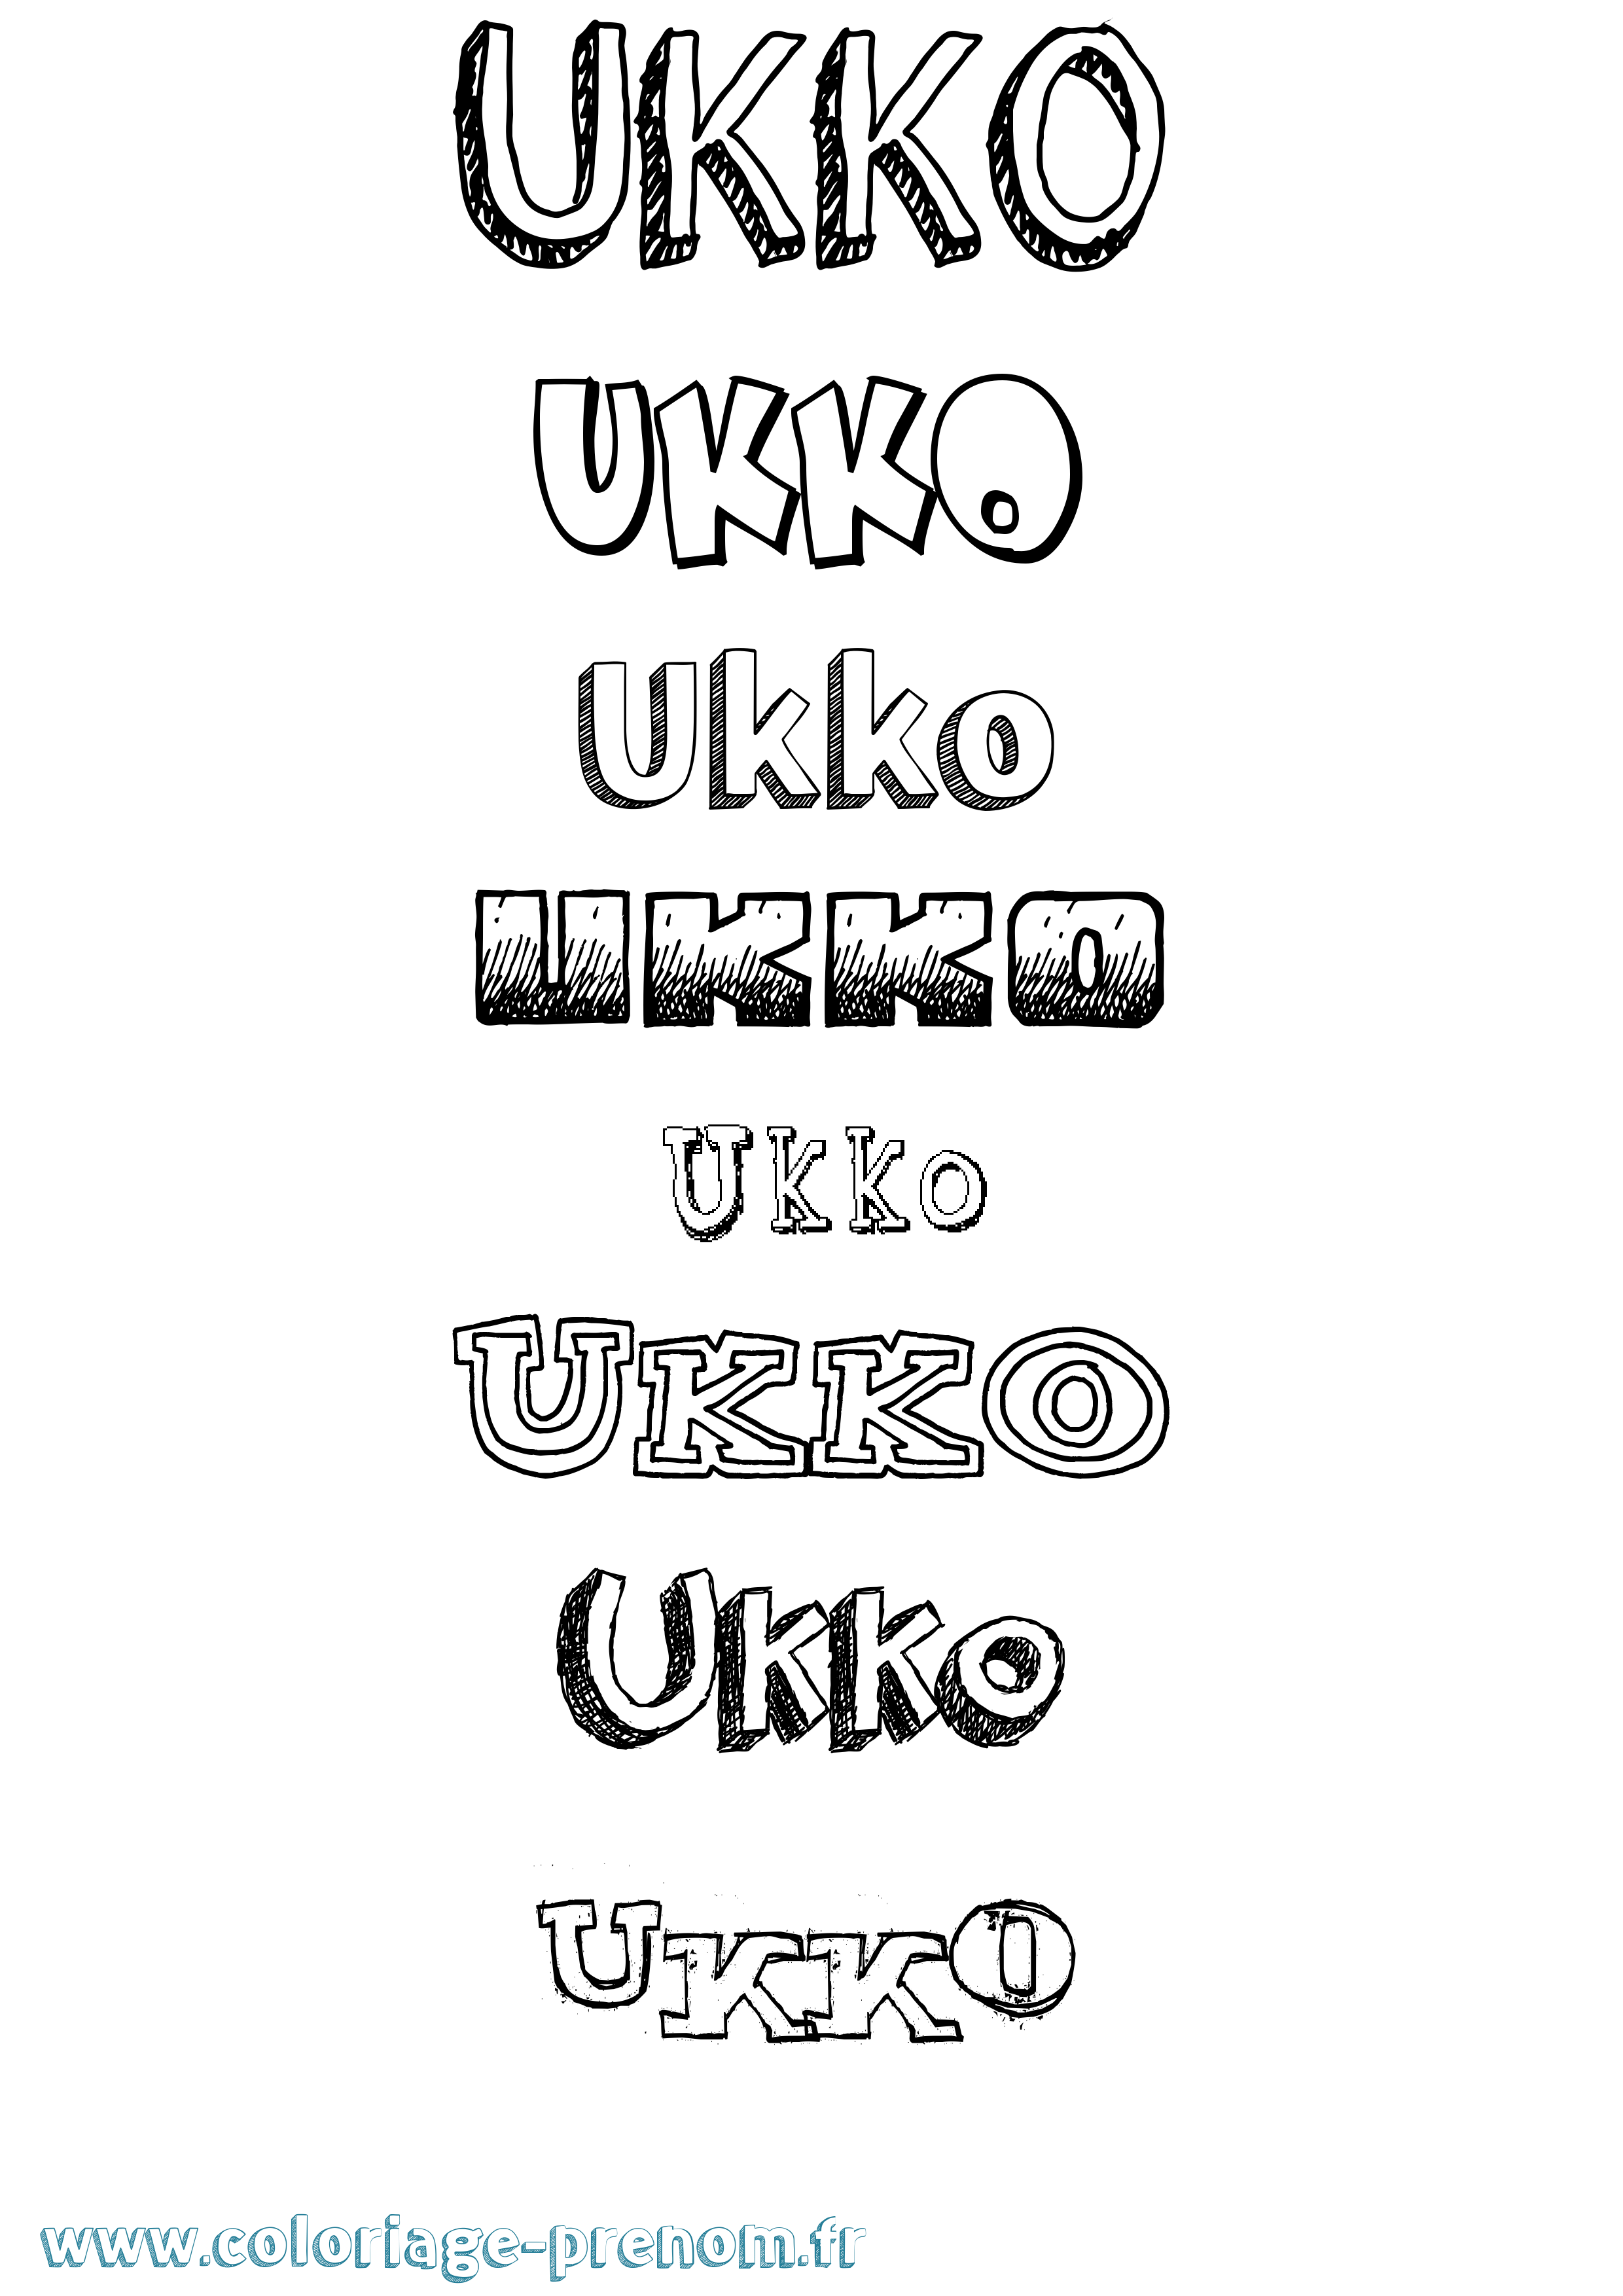 Coloriage prénom Ukko Dessiné